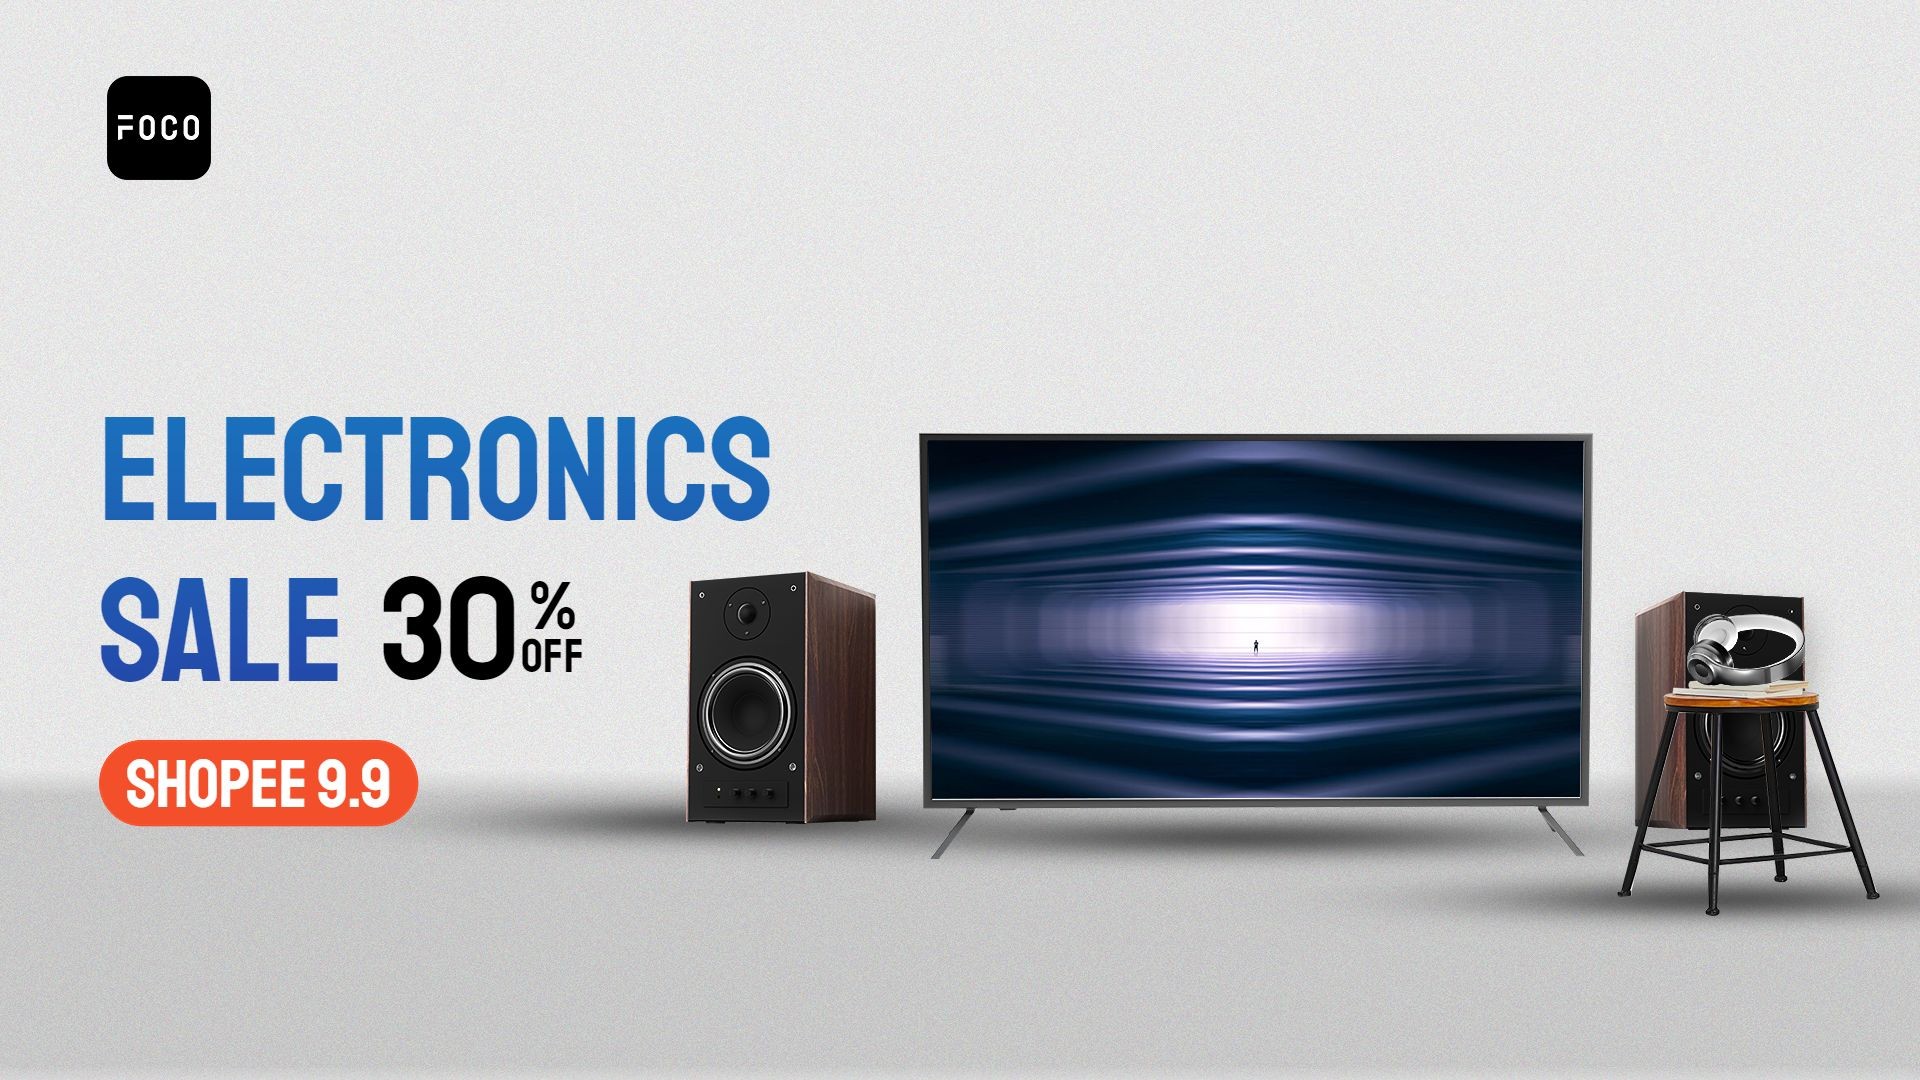 Shopee 9.9 Home Smart Electronics Discount Sale Promo Ecommerce Banner